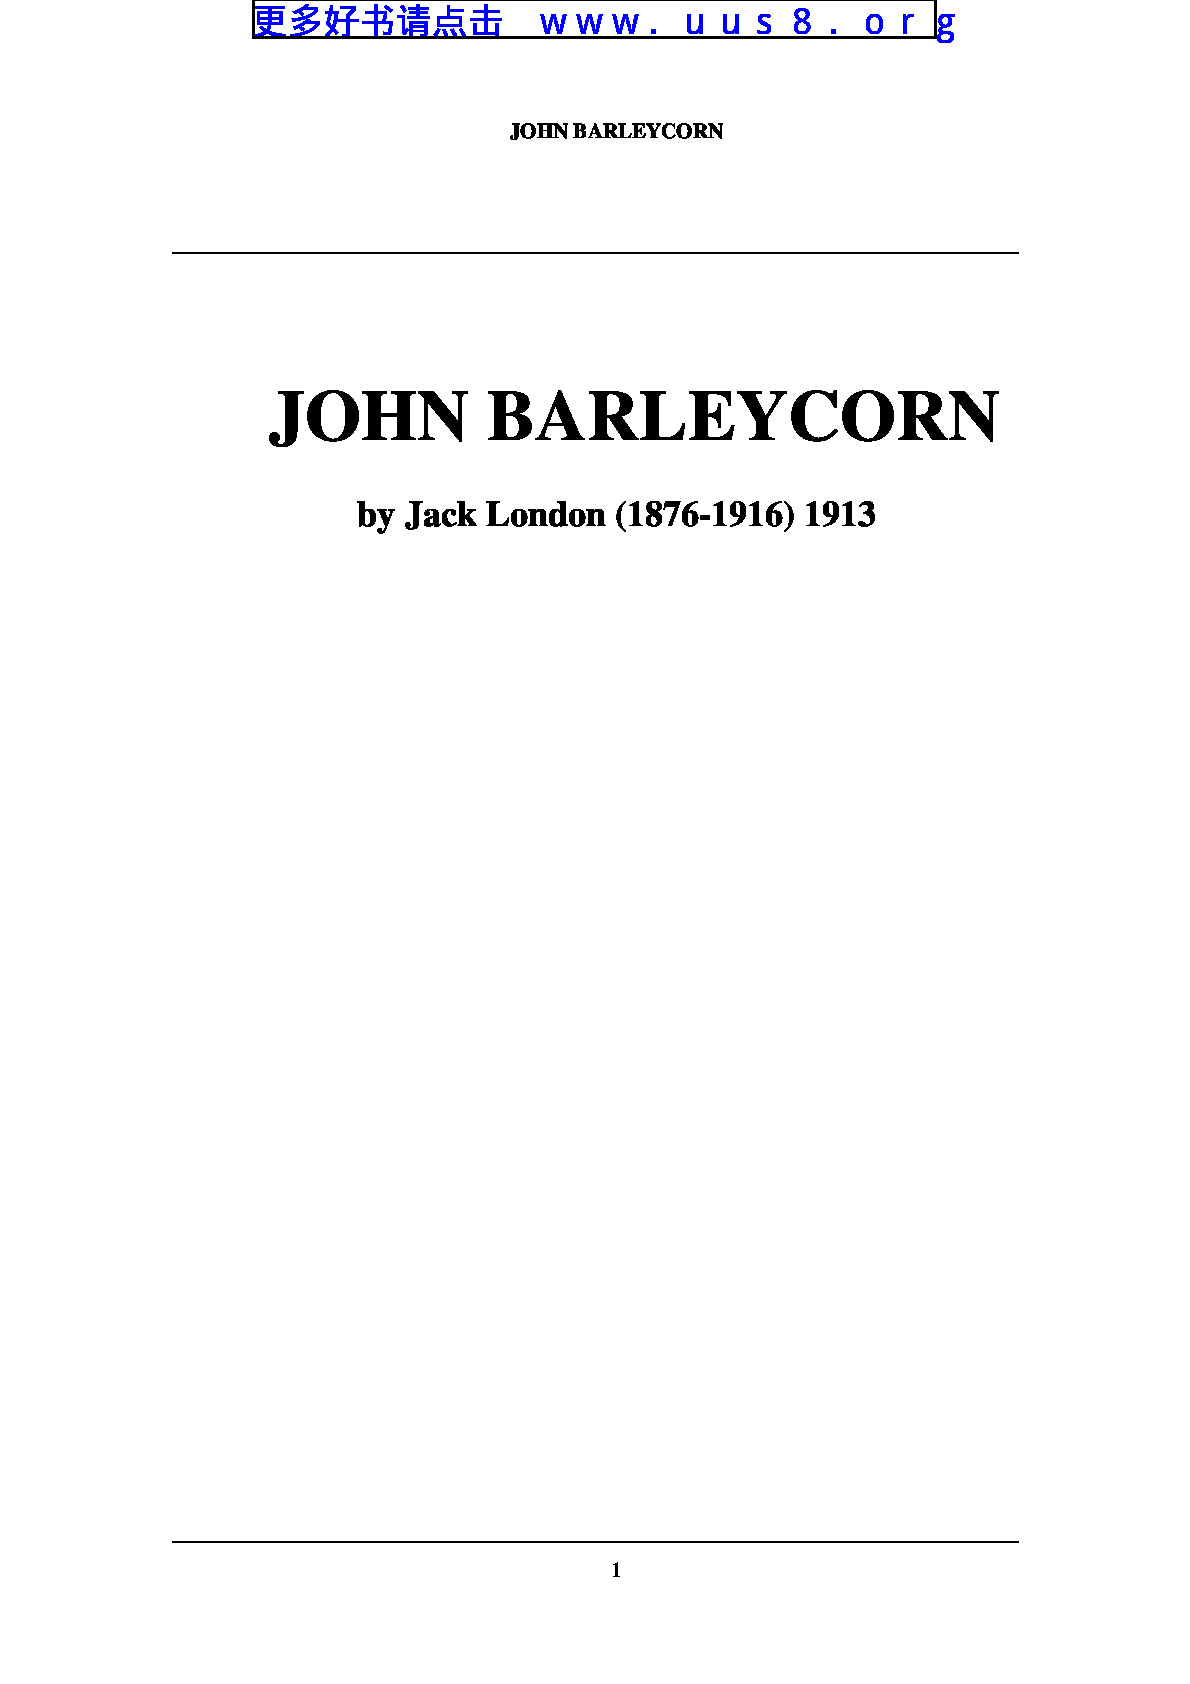 JOHN_BARLEYCORN(约翰·巴雷库恩)